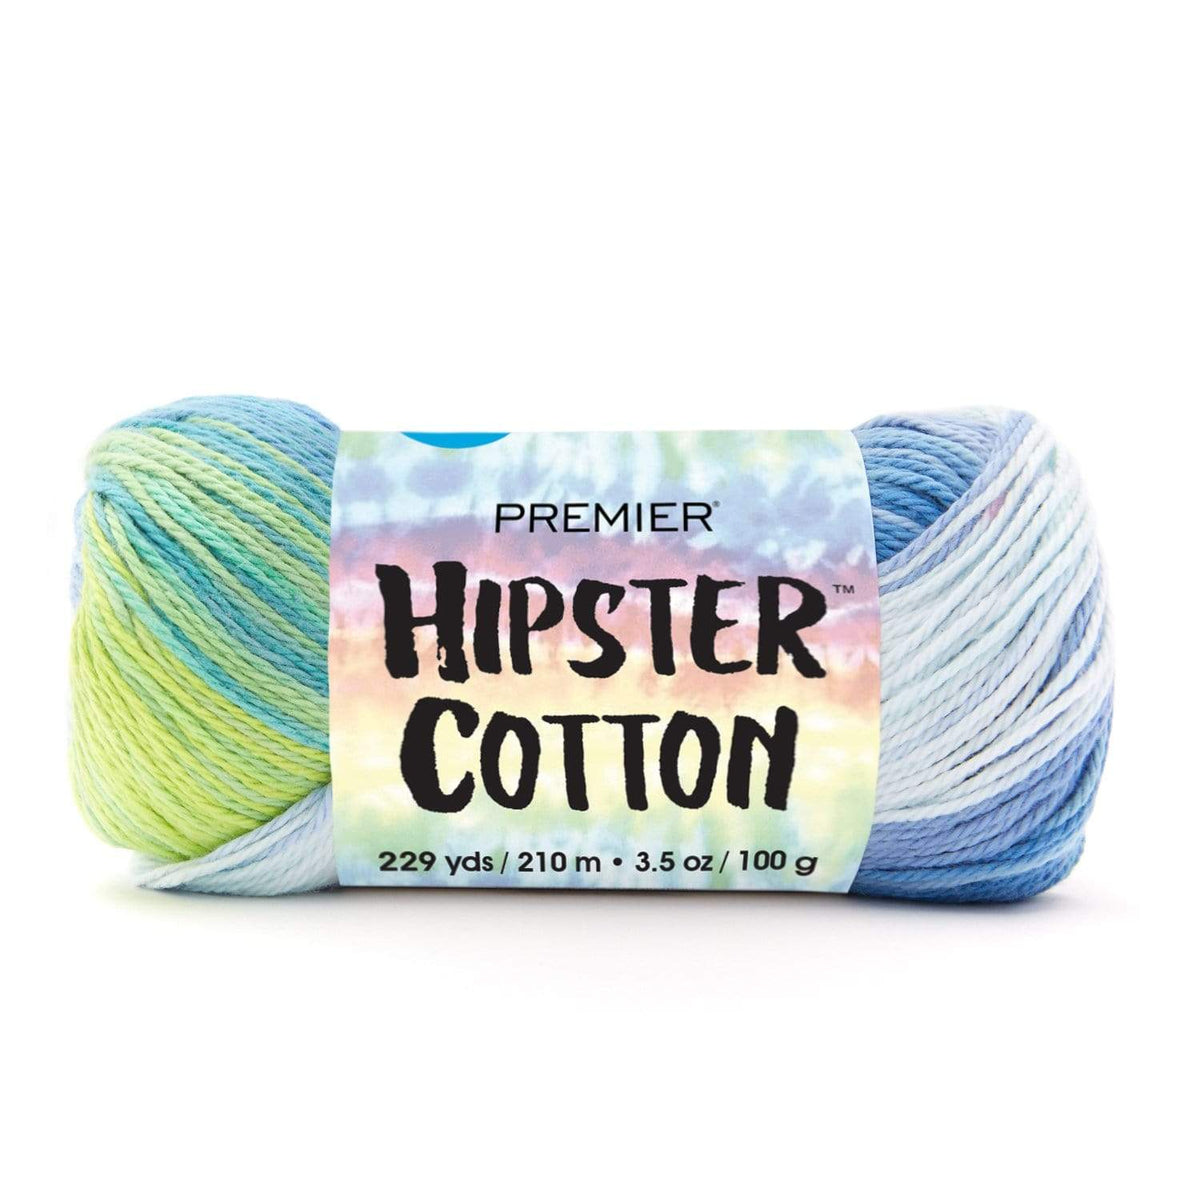 Premier Hipster® Cotton – Premier Yarns